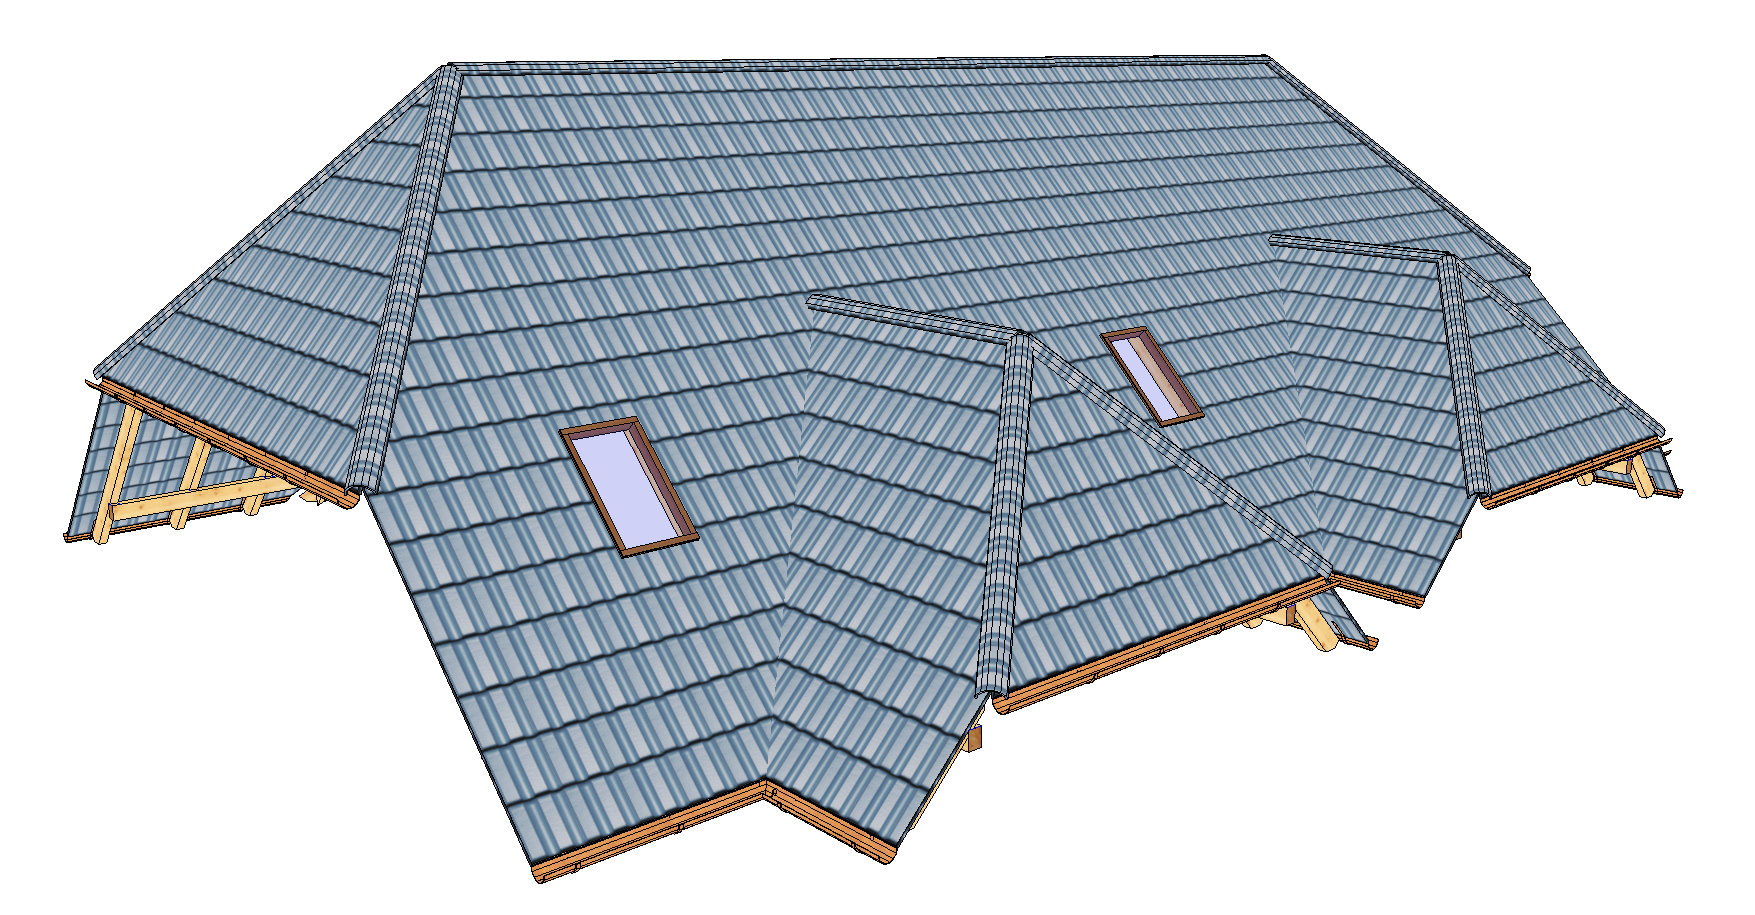 LIGNIKON Large V16 | 3D-CAD Holzbausoftware für Tragkonstruktionen & Abbund | Zur Miete